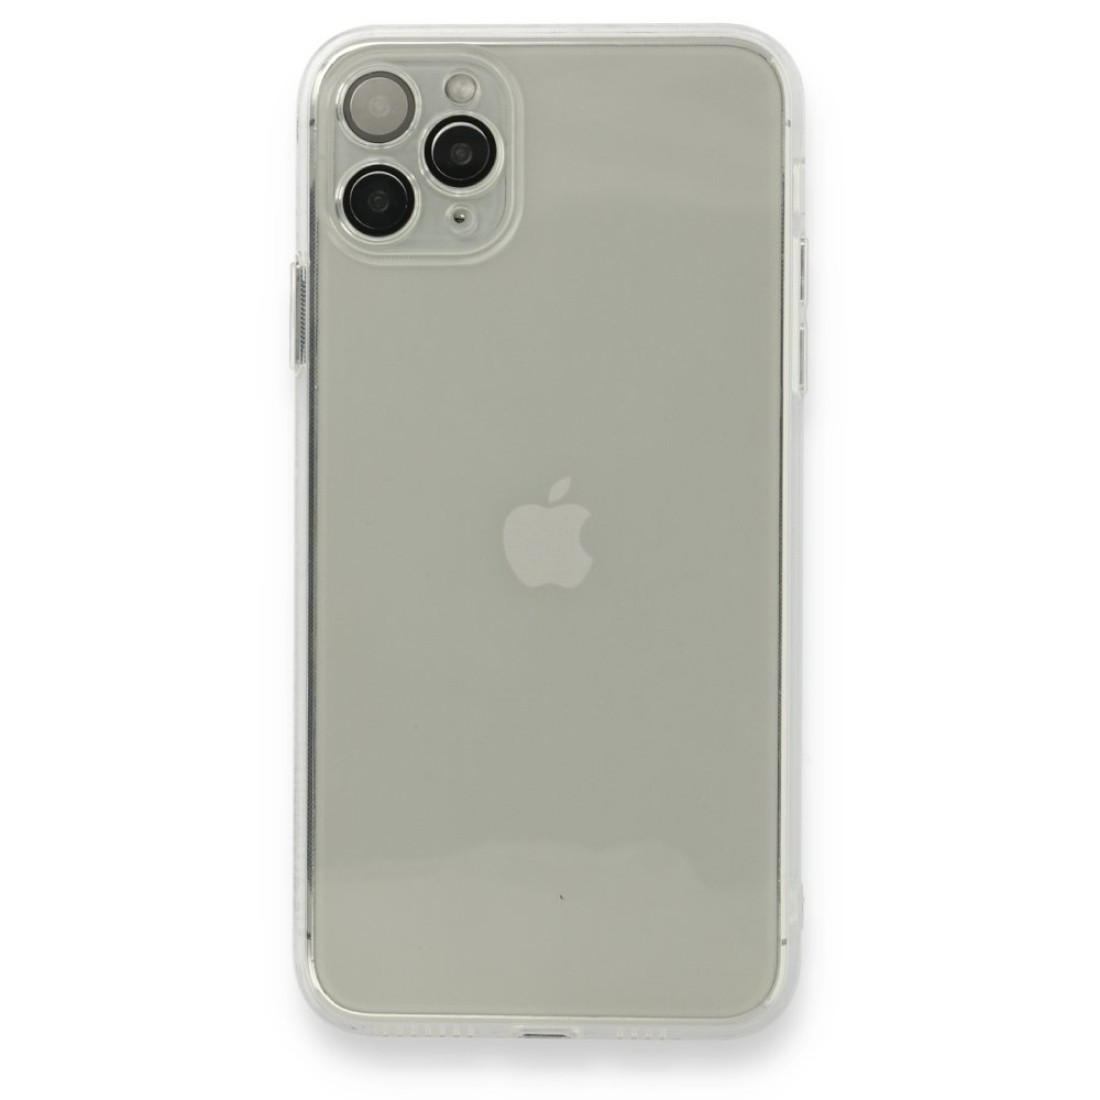 Apple iPhone 11 Pro Kılıf Fly Lens Silikon - Şeffaf